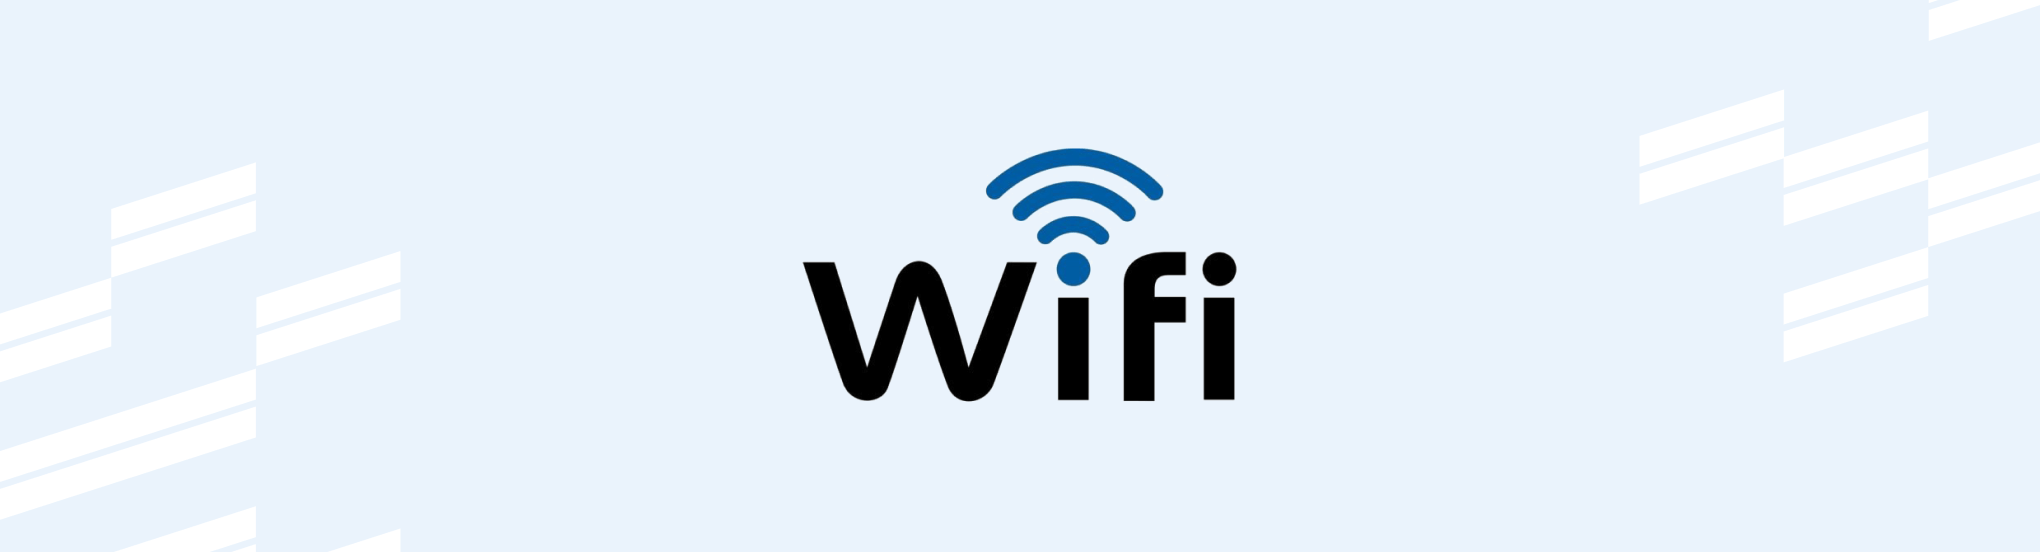 Top 7 smart home protocols - WiFi - Lemberg Solutions